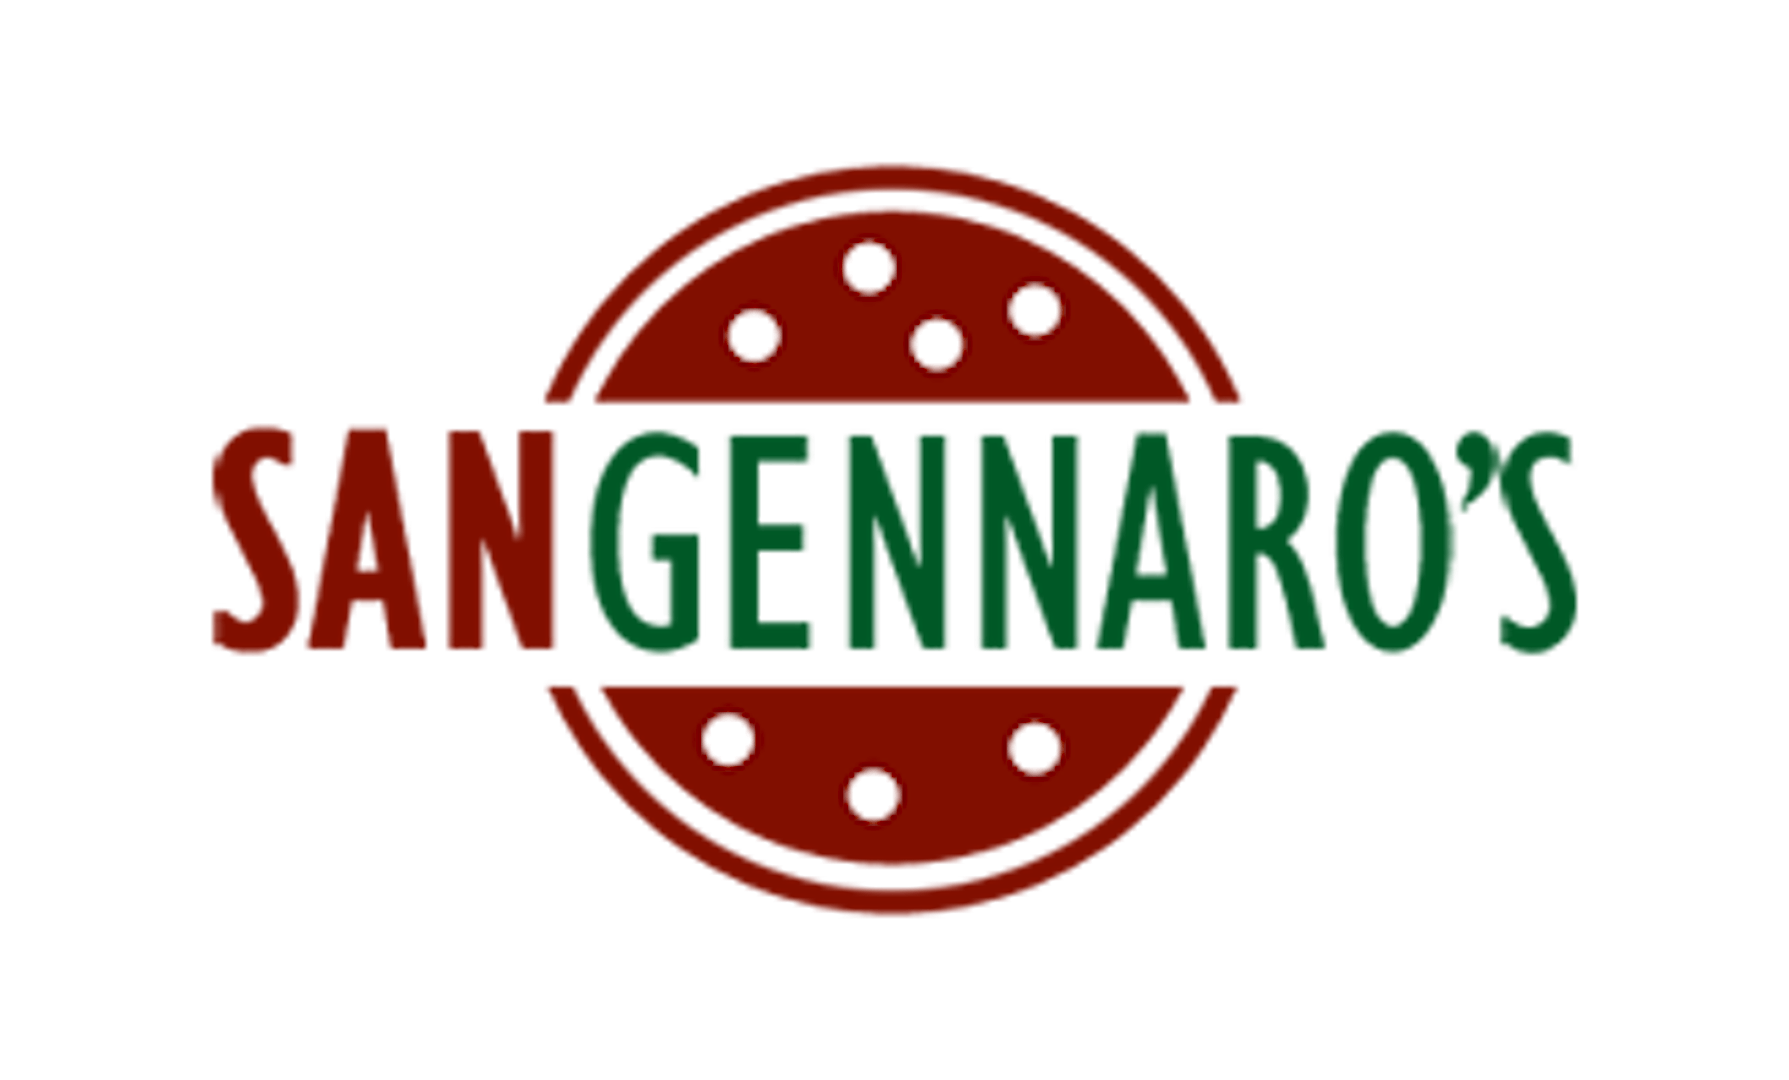 San Gennaro's